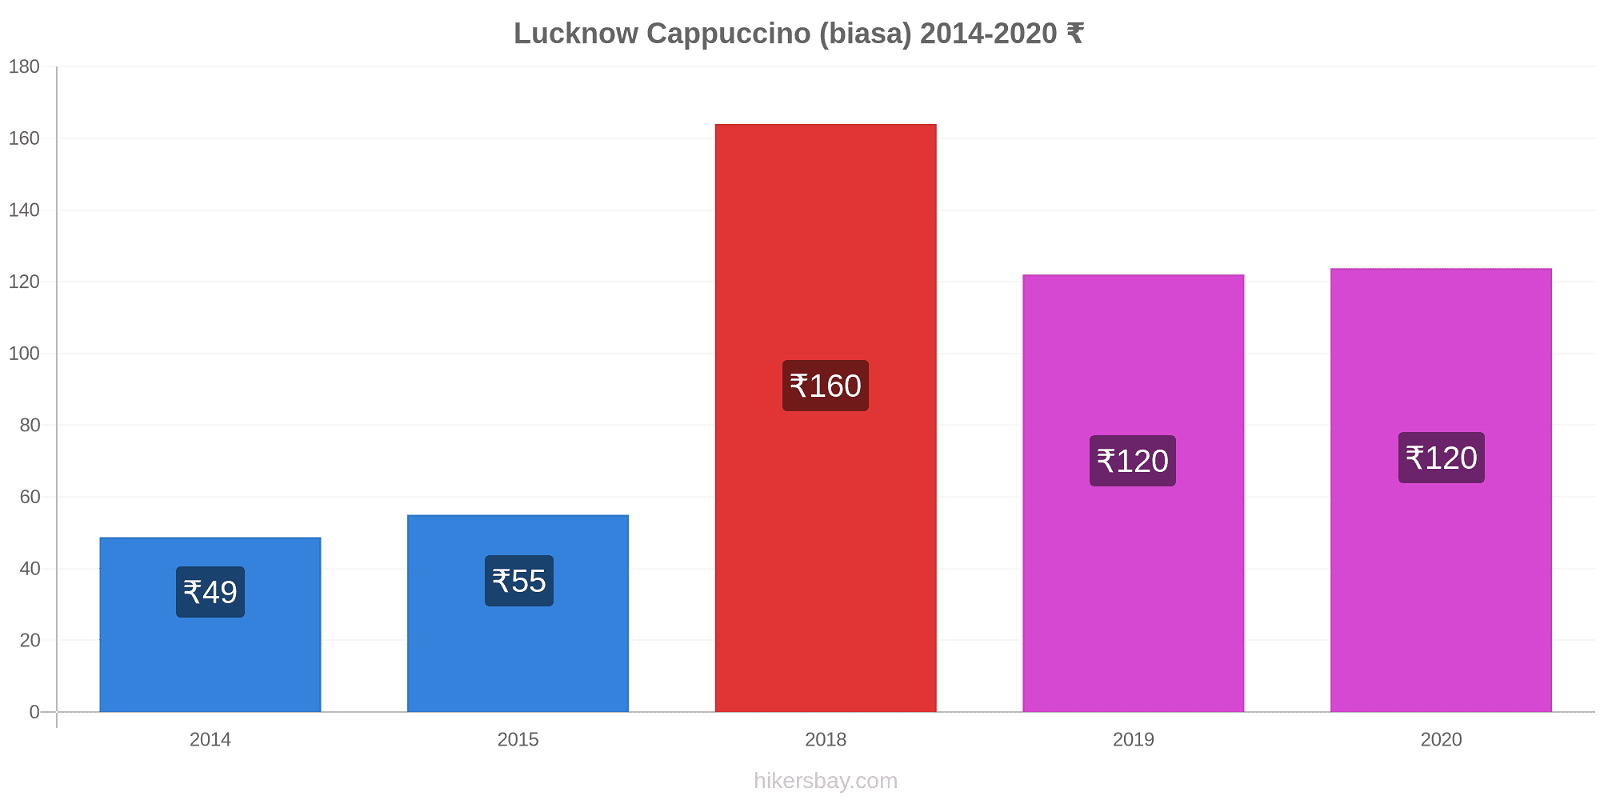 Lucknow perubahan harga Cappuccino (biasa) hikersbay.com